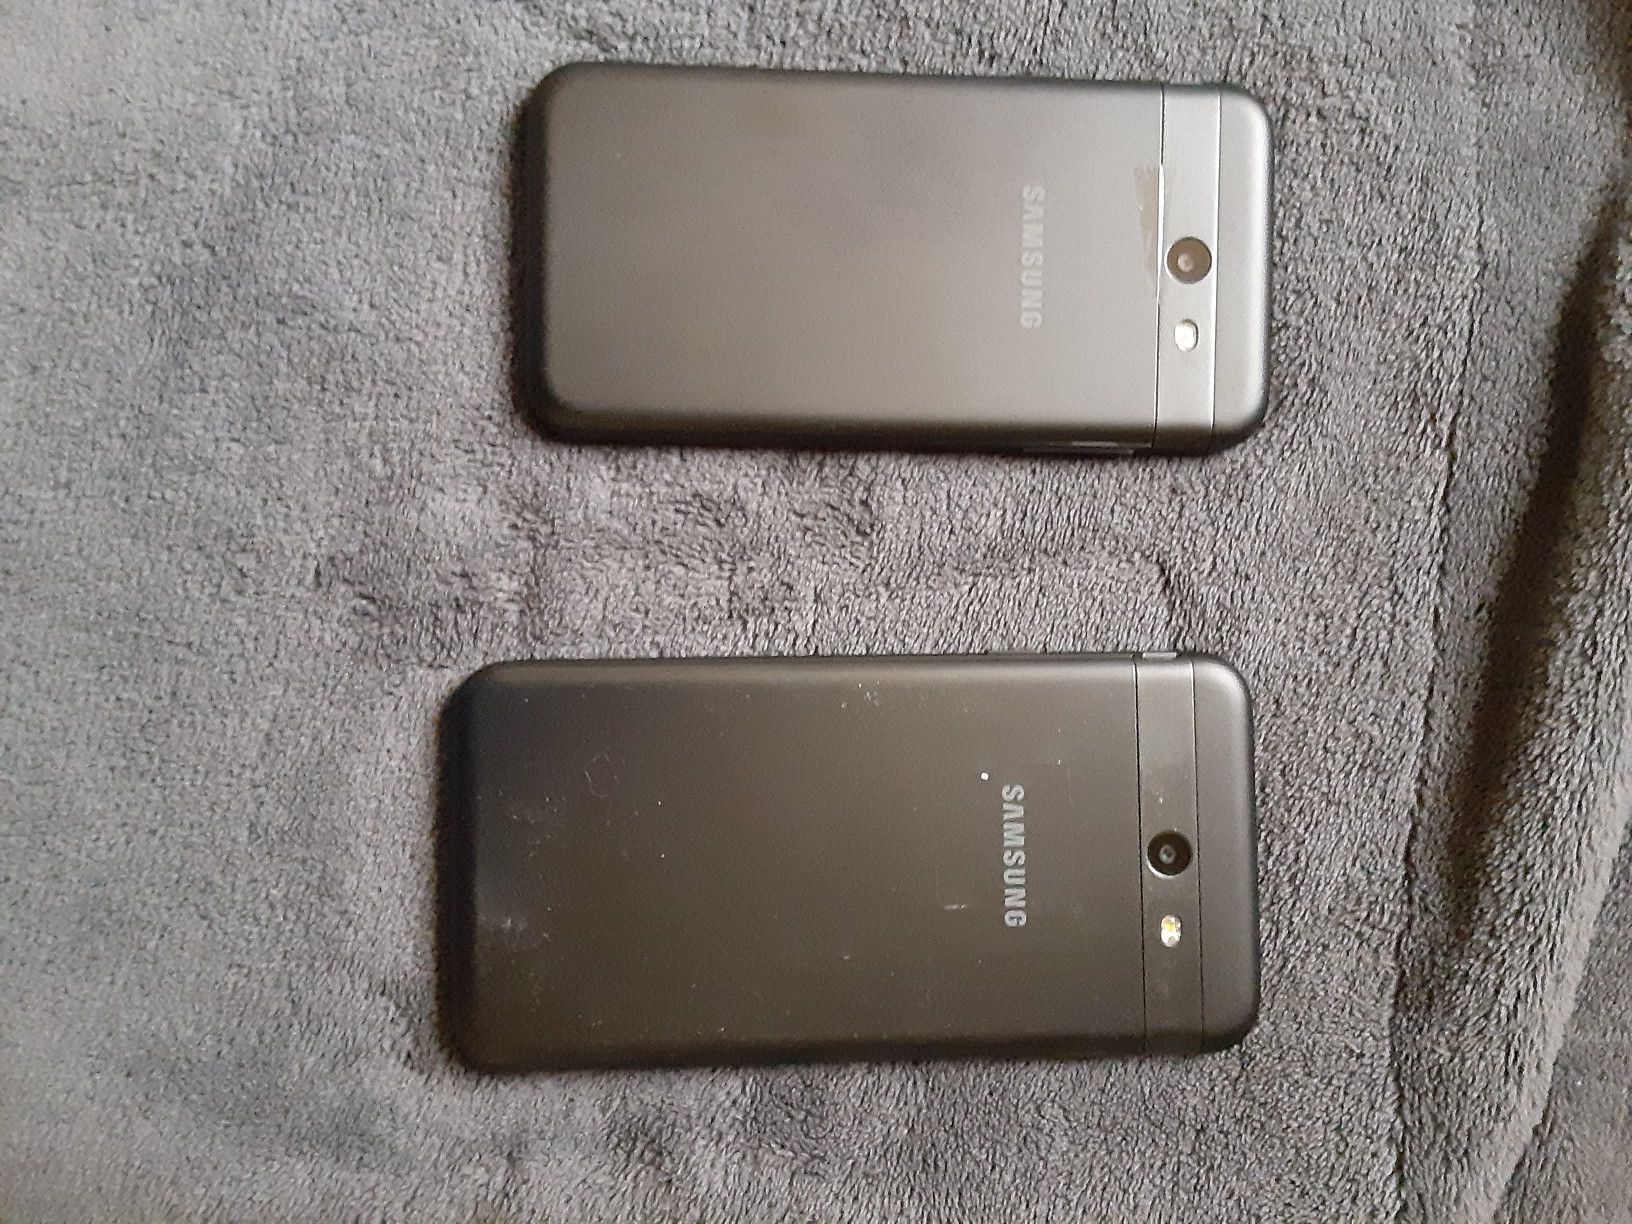 2 Samsung straight talk phones